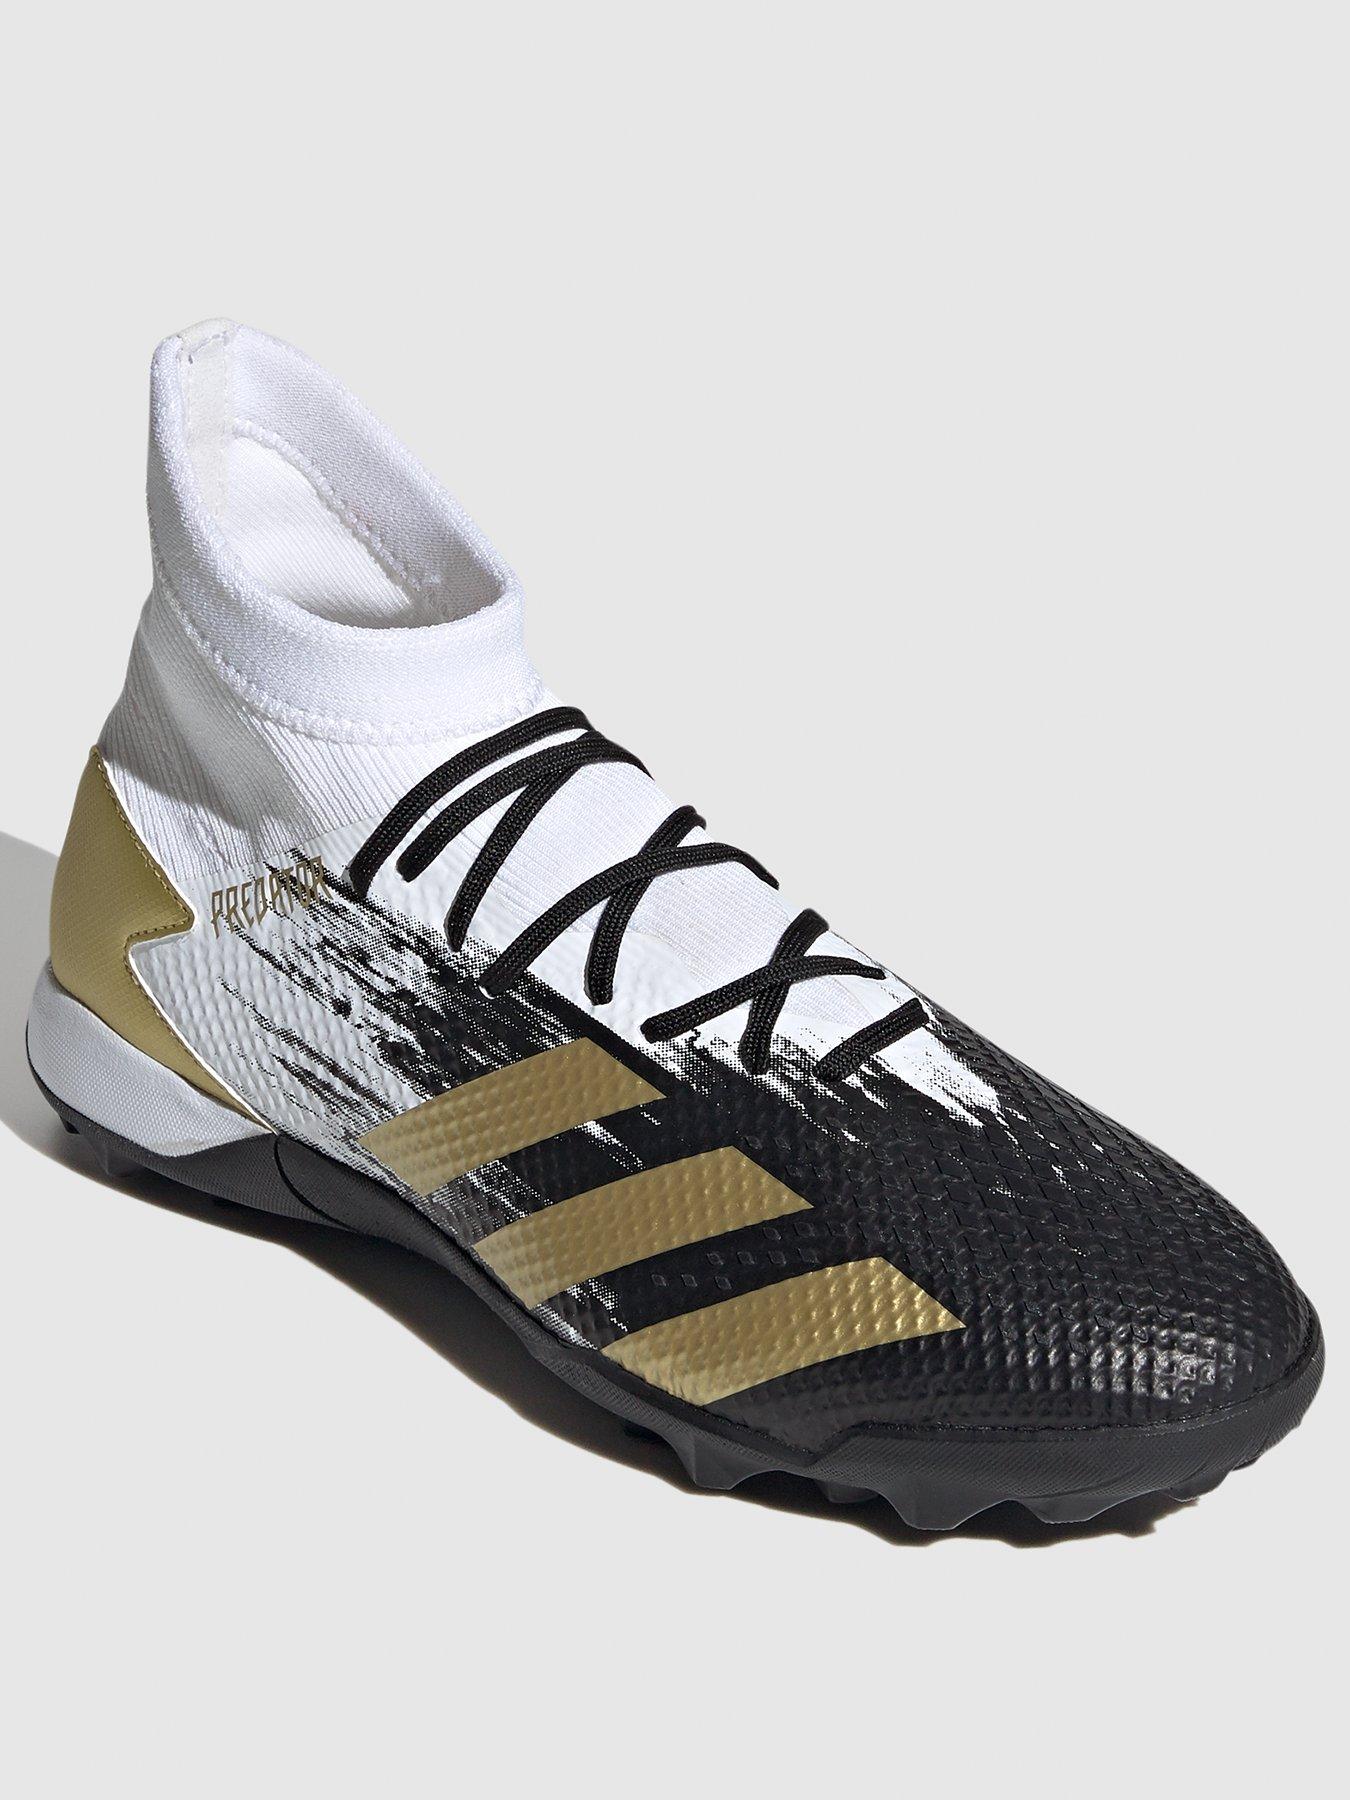 adidas astro turf football boots